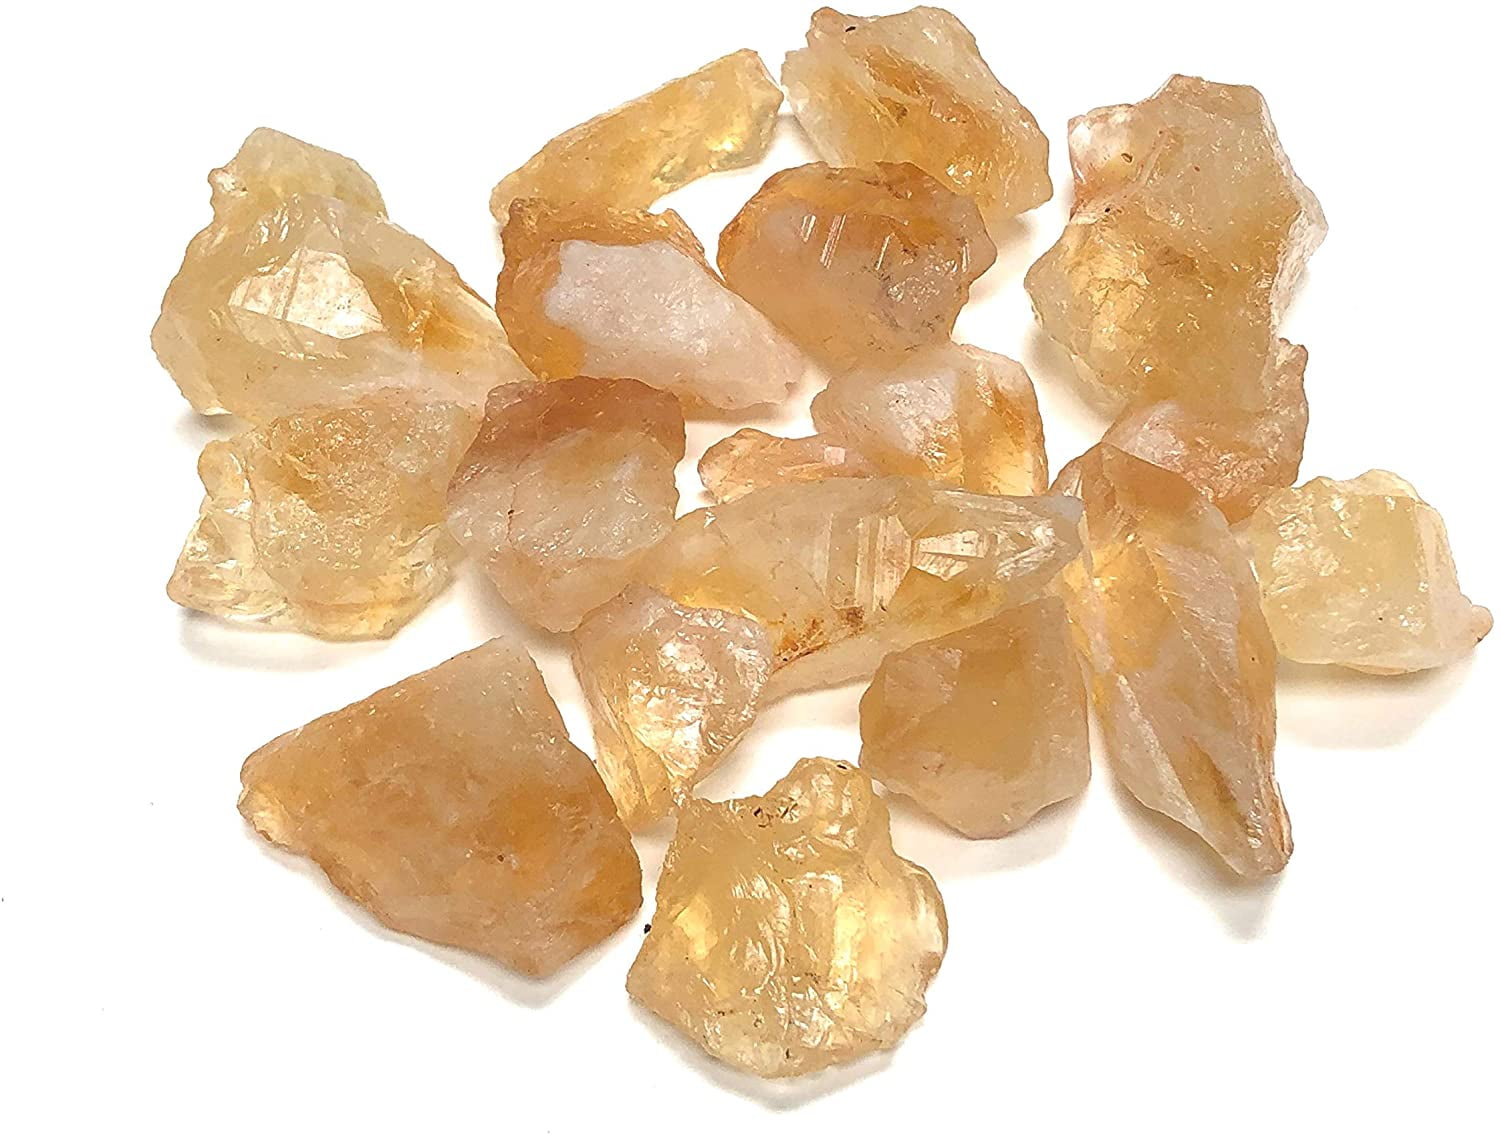 Zentron™ Crystals White Calcite Rough Stone 2 lb Bulk Lot 